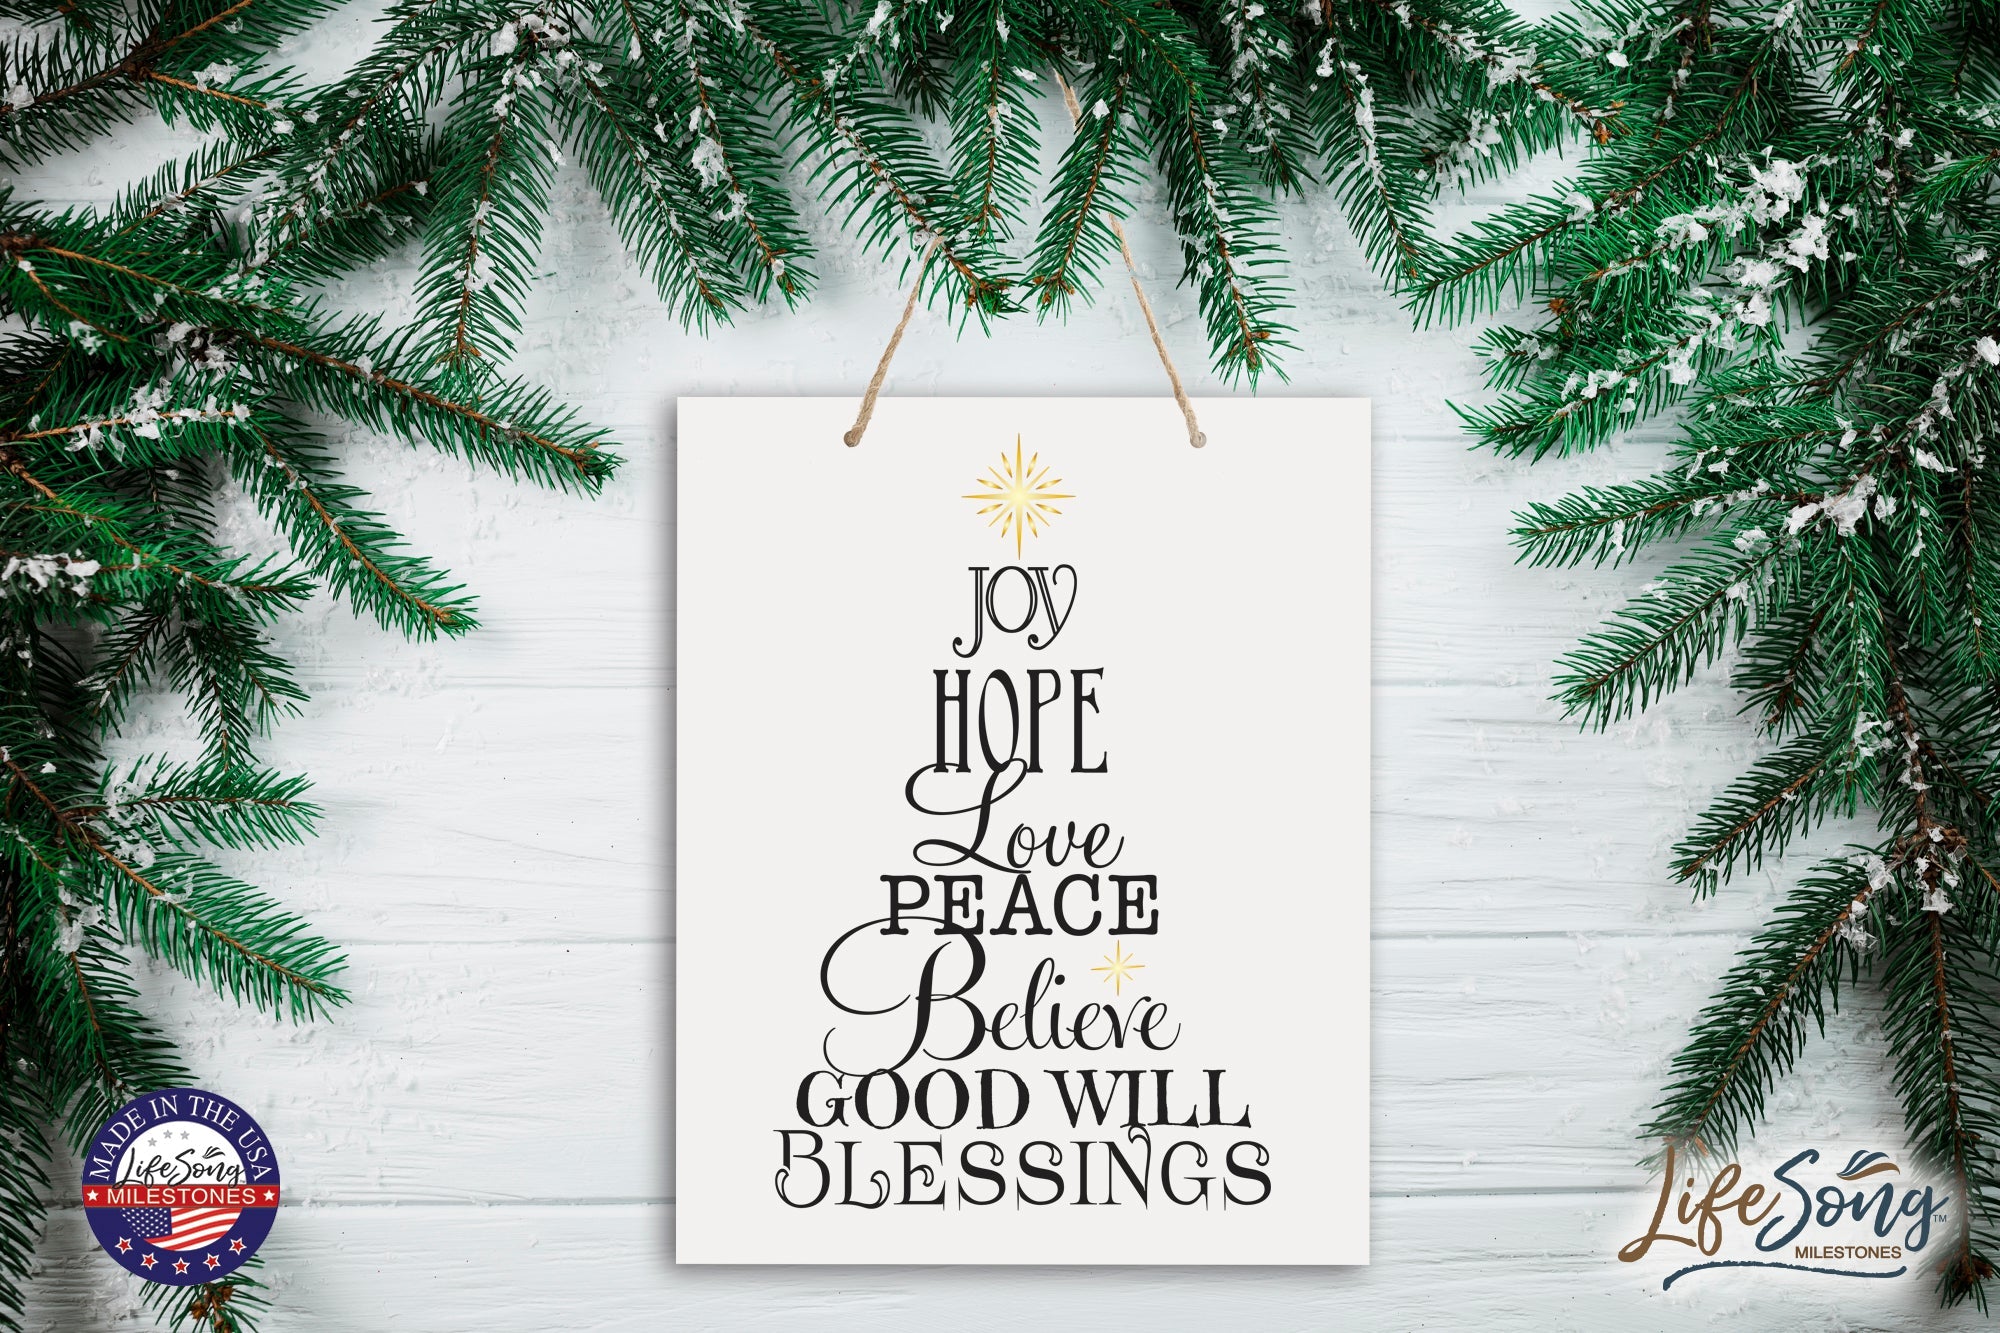 Merry Christmas Wall Hanging Sign - Joy Hope Love - LifeSong Milestones